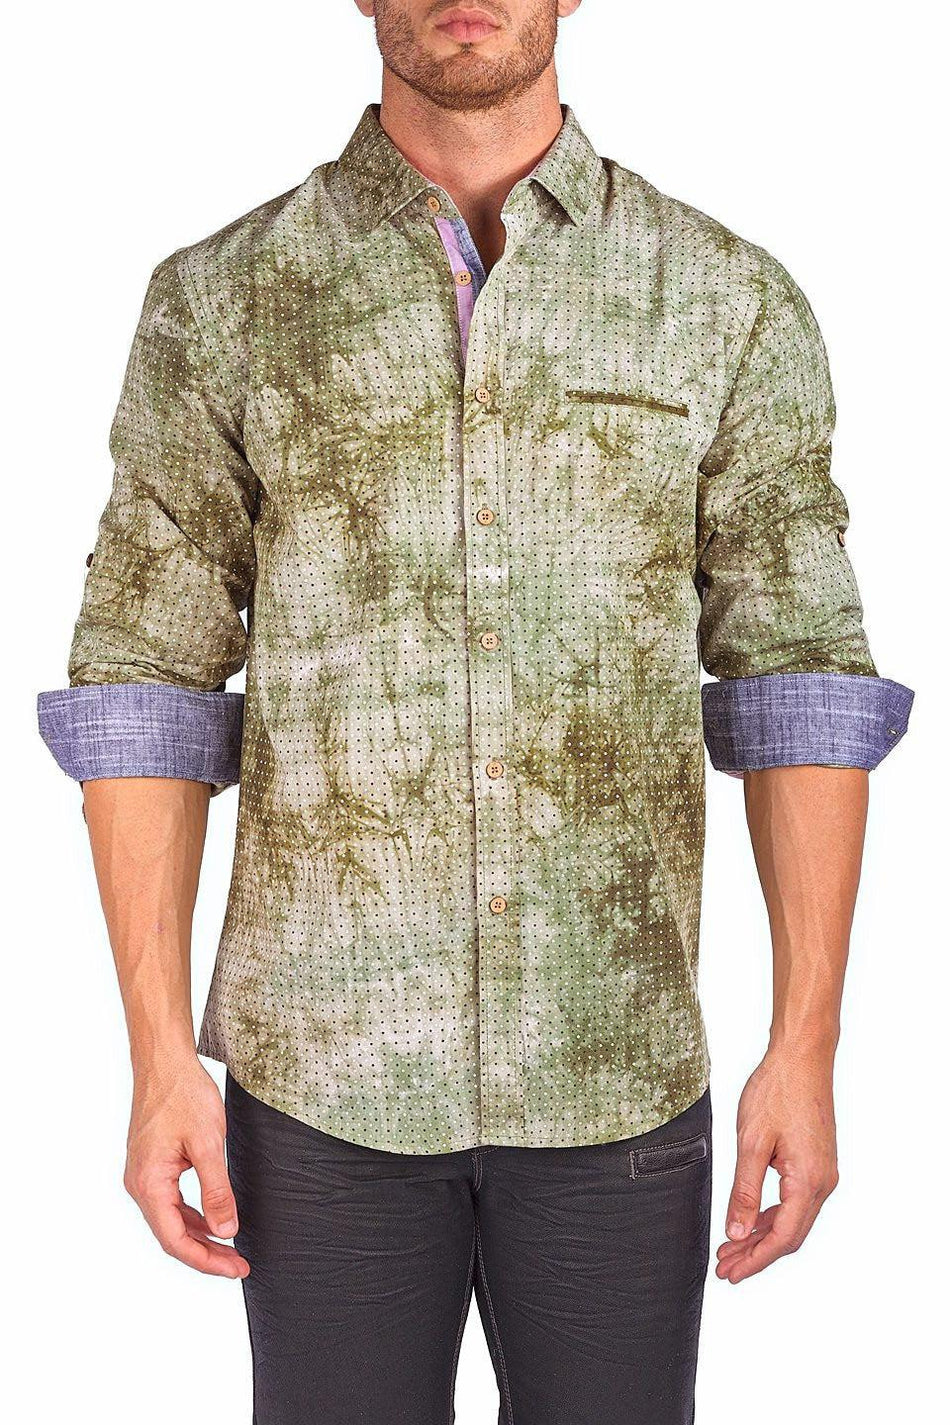 BESPOKE - Mens Green Long Sleeve Dress Shirt - Modern Fit - 162557 - www.bespokemoda.com